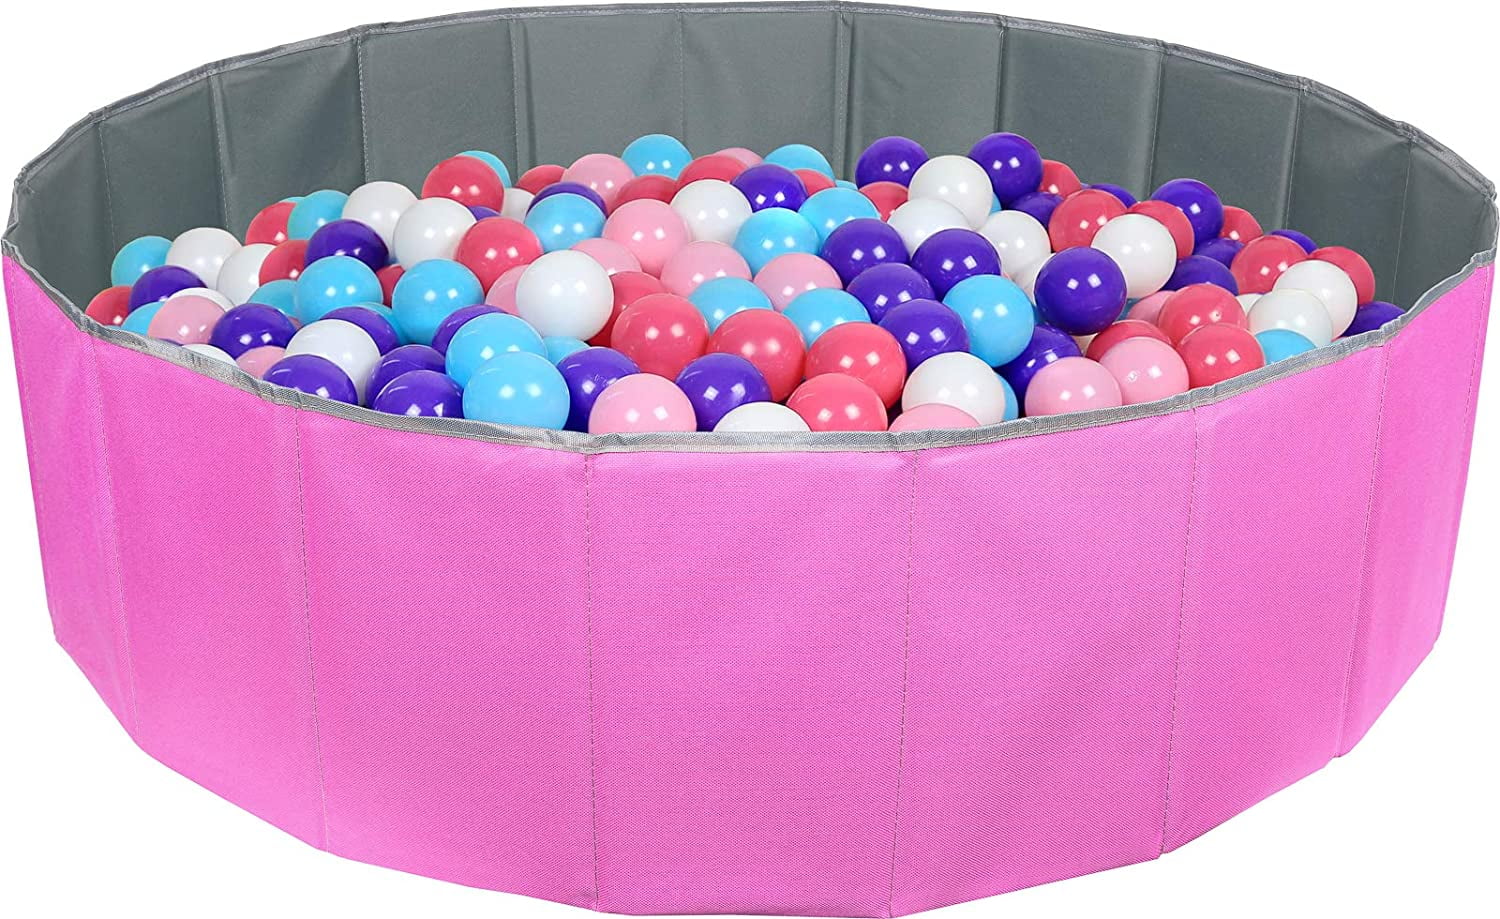 Foam pool for children with 200 colurful balls Garden fun 